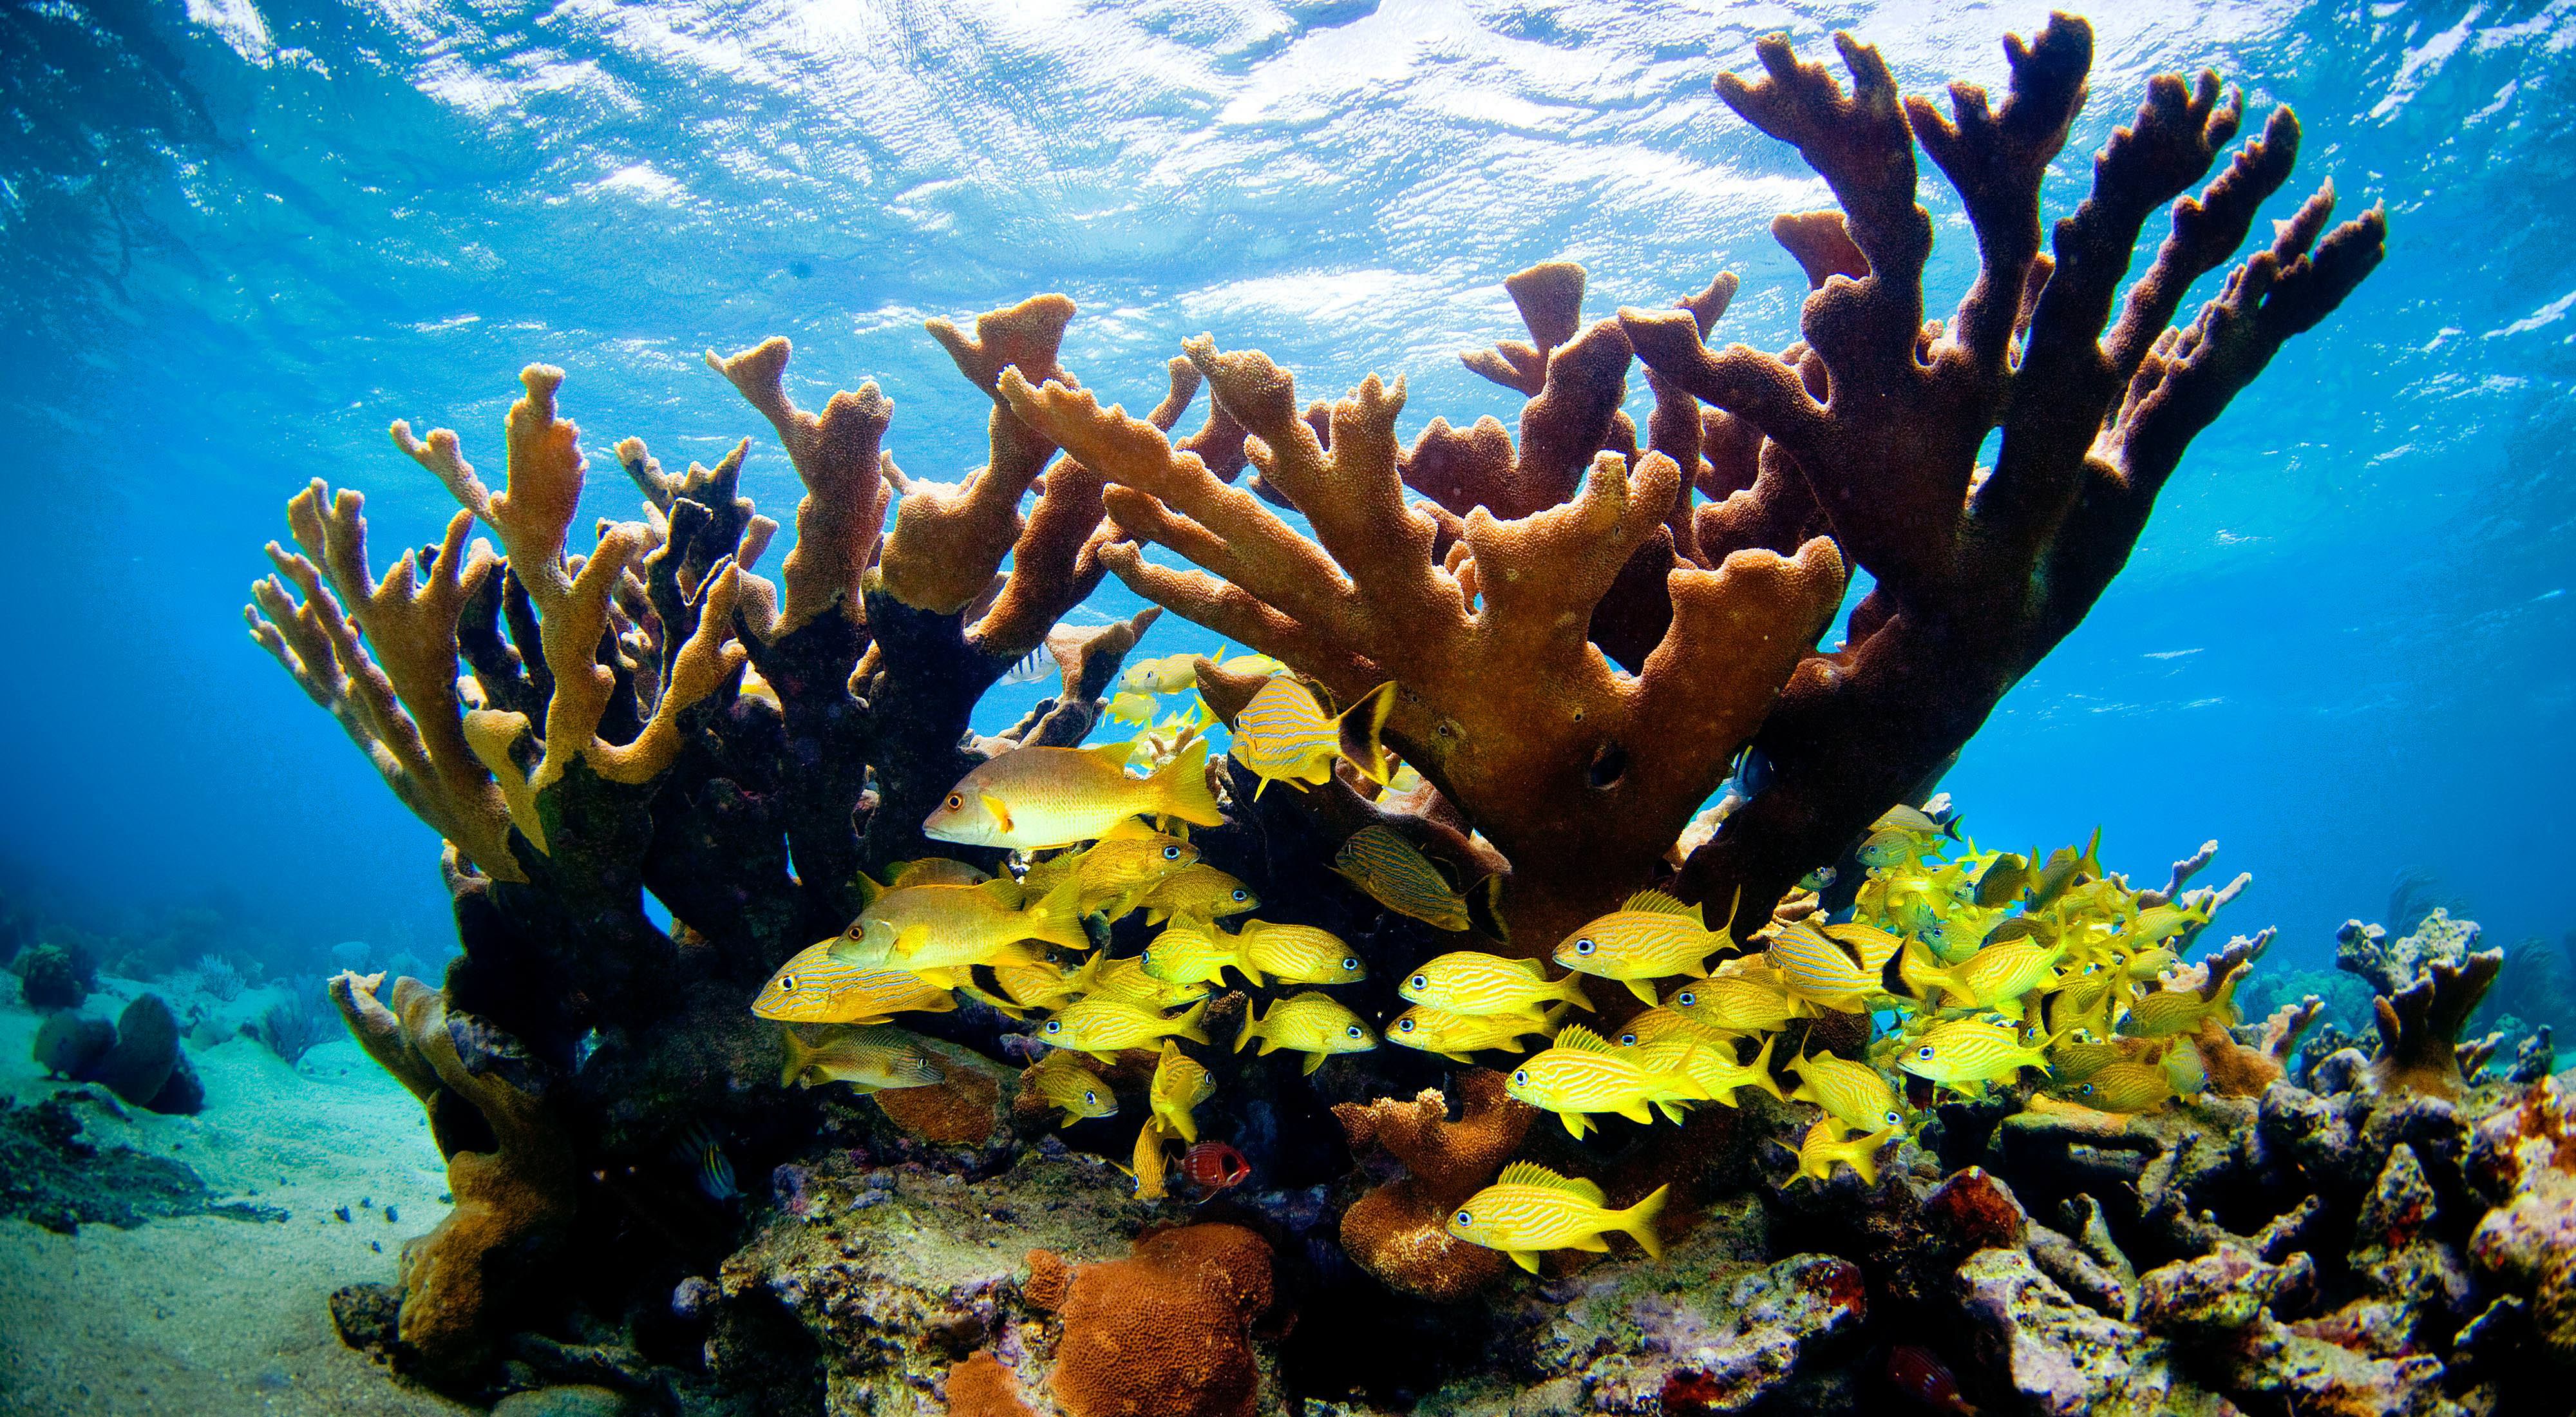 French grunts swim among elkhorn coral